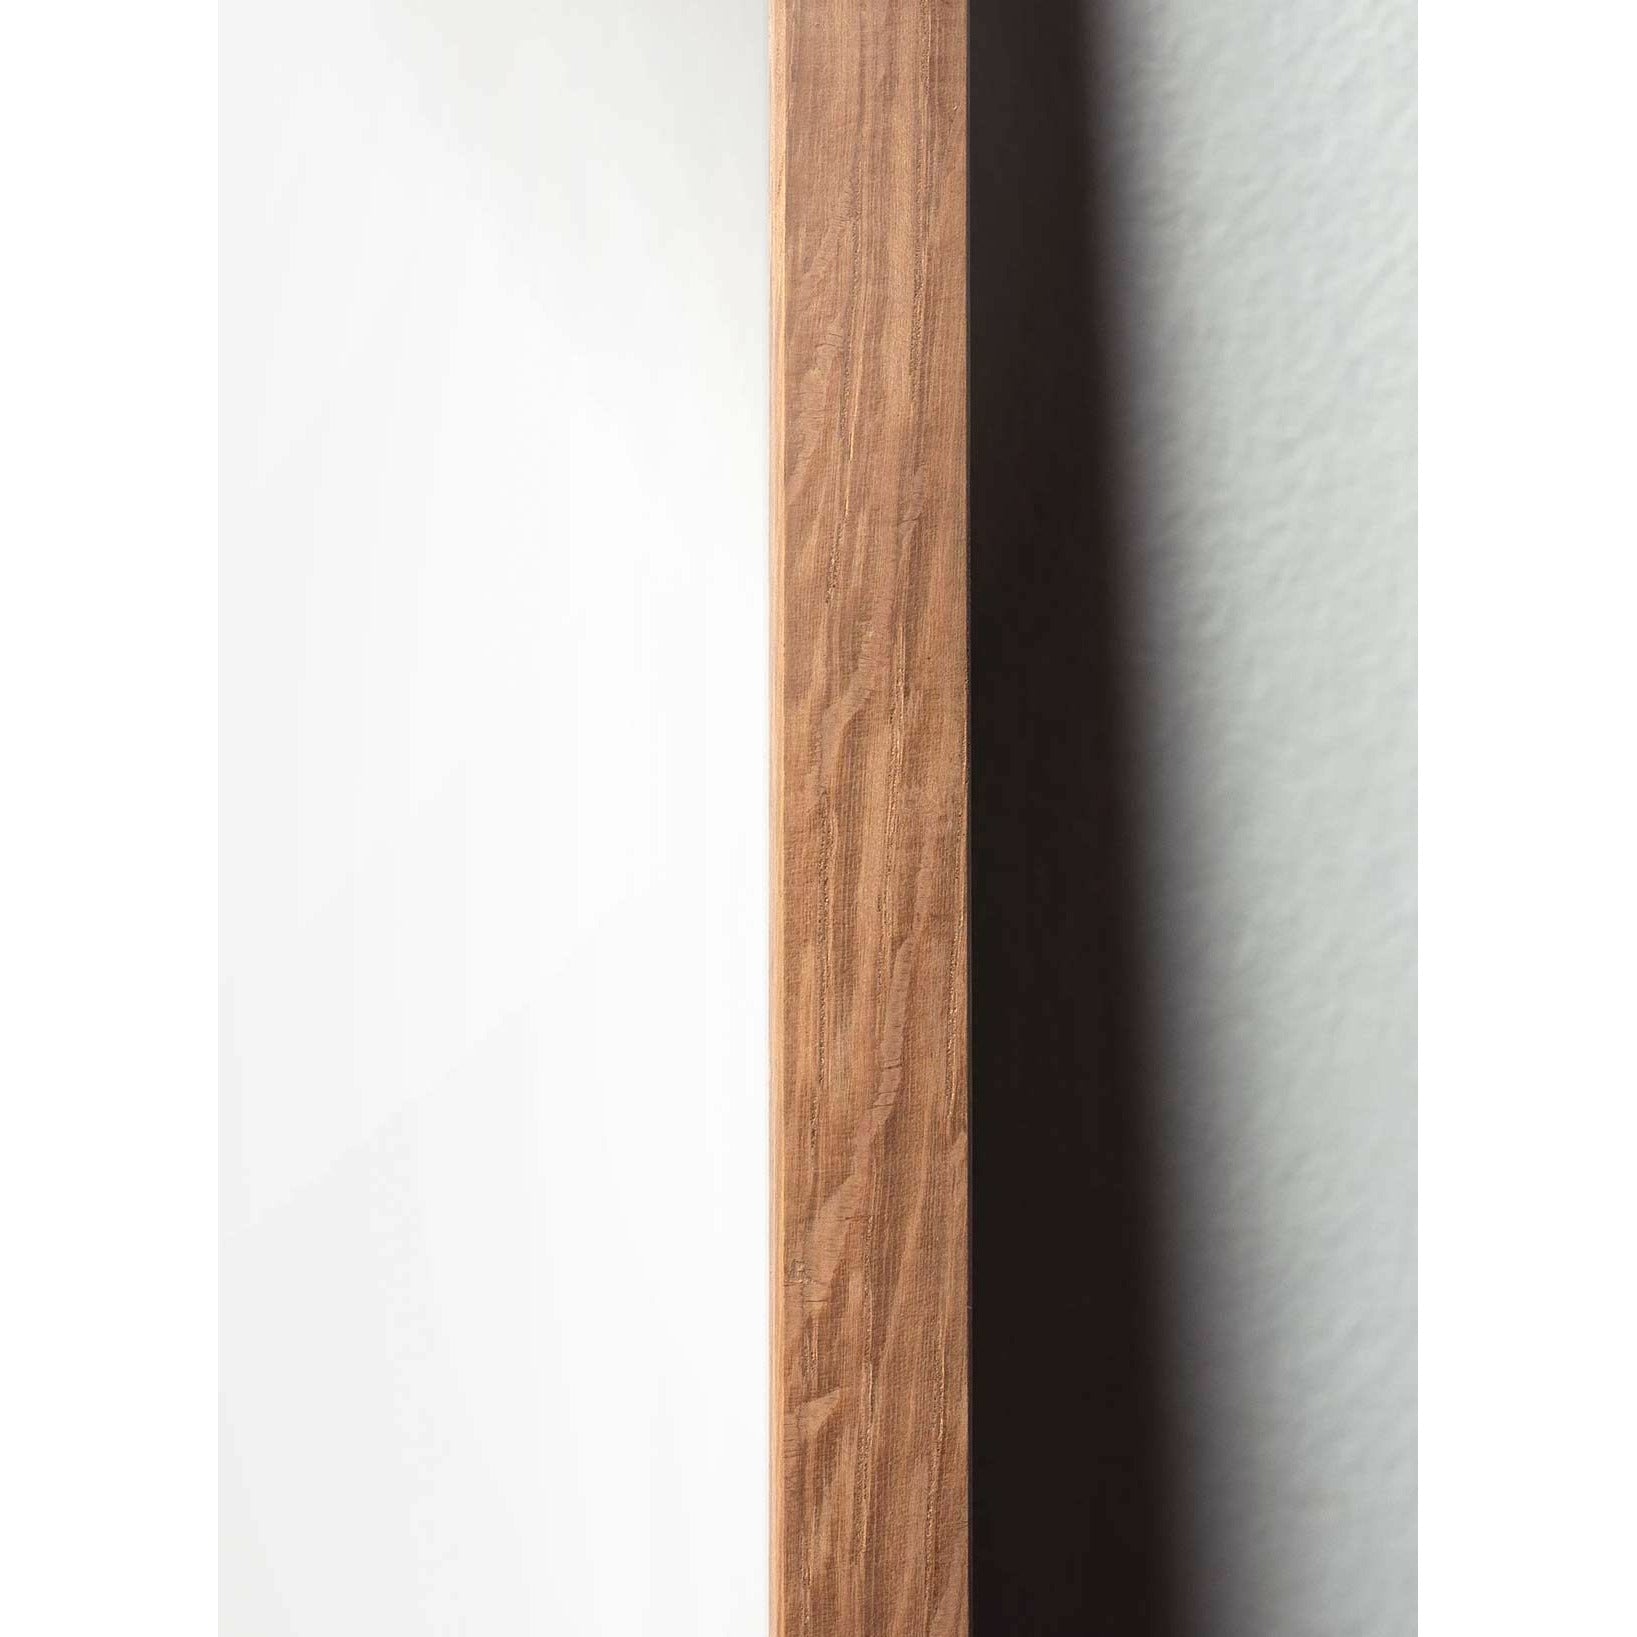 Póster clásico de BrainChild Teddy Bear, marco hecho de madera clara de 50x70 cm, fondo de color arena